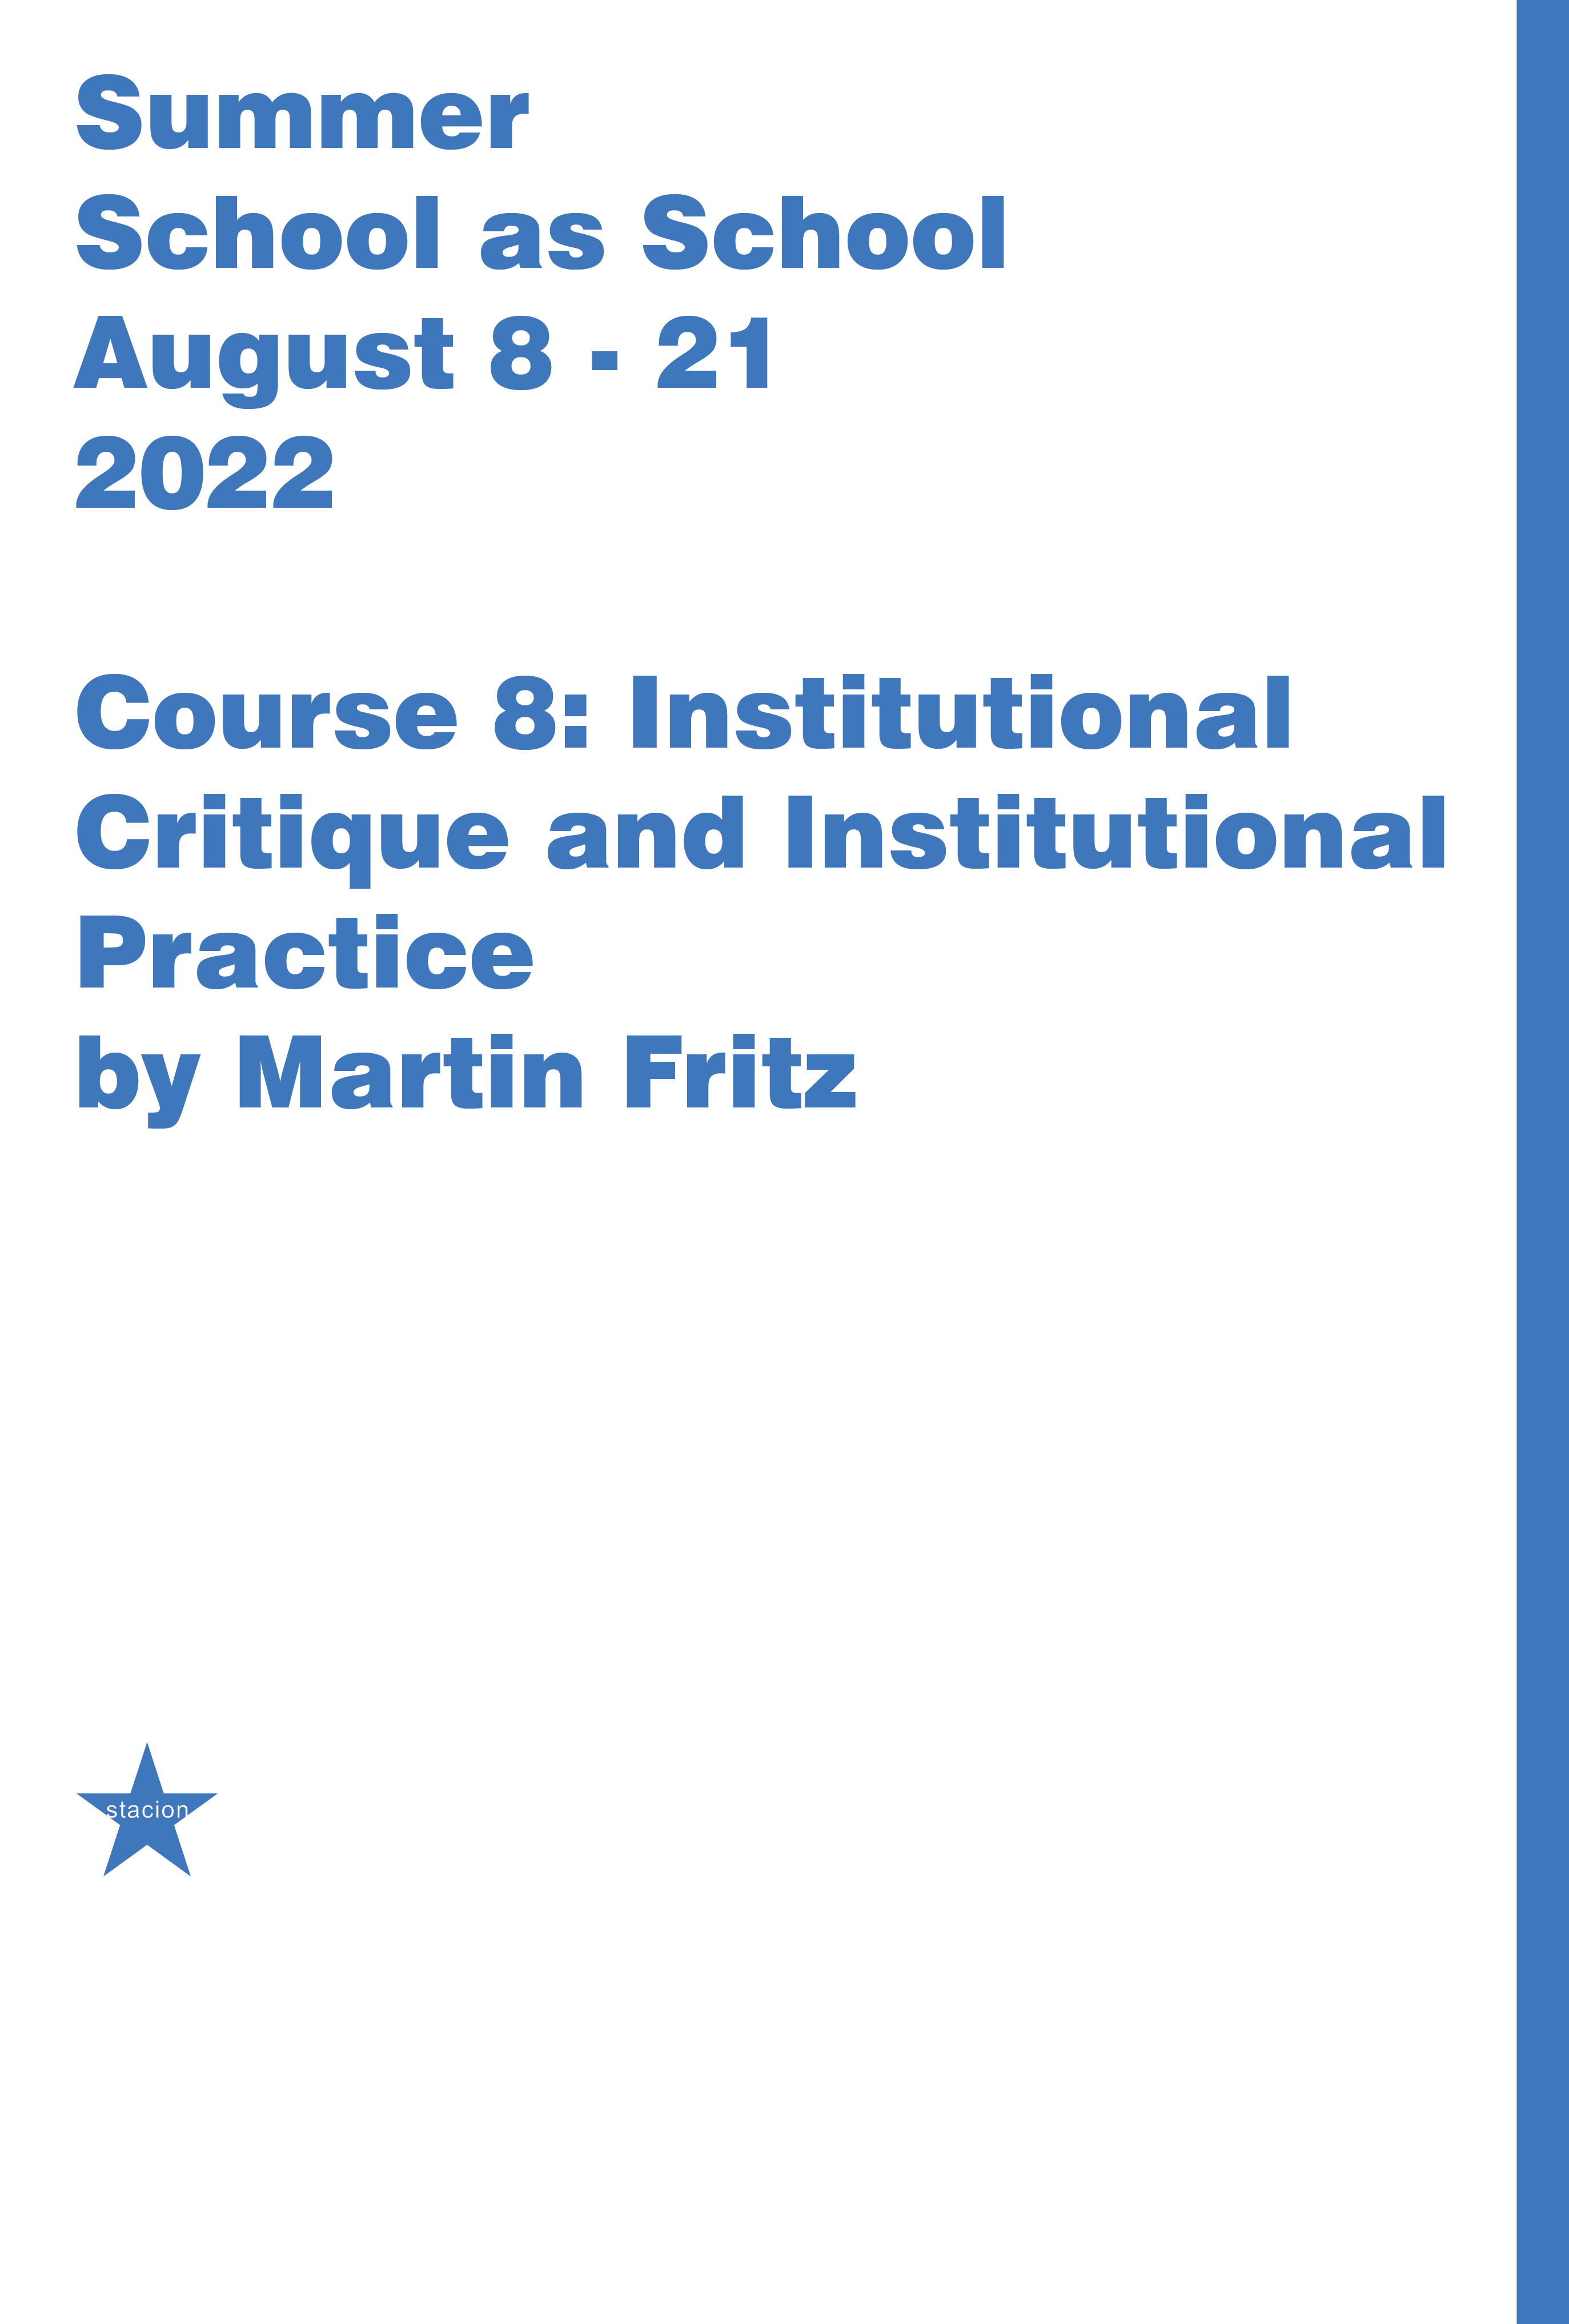 Course 8: Institutional Critique and Institutional Practice